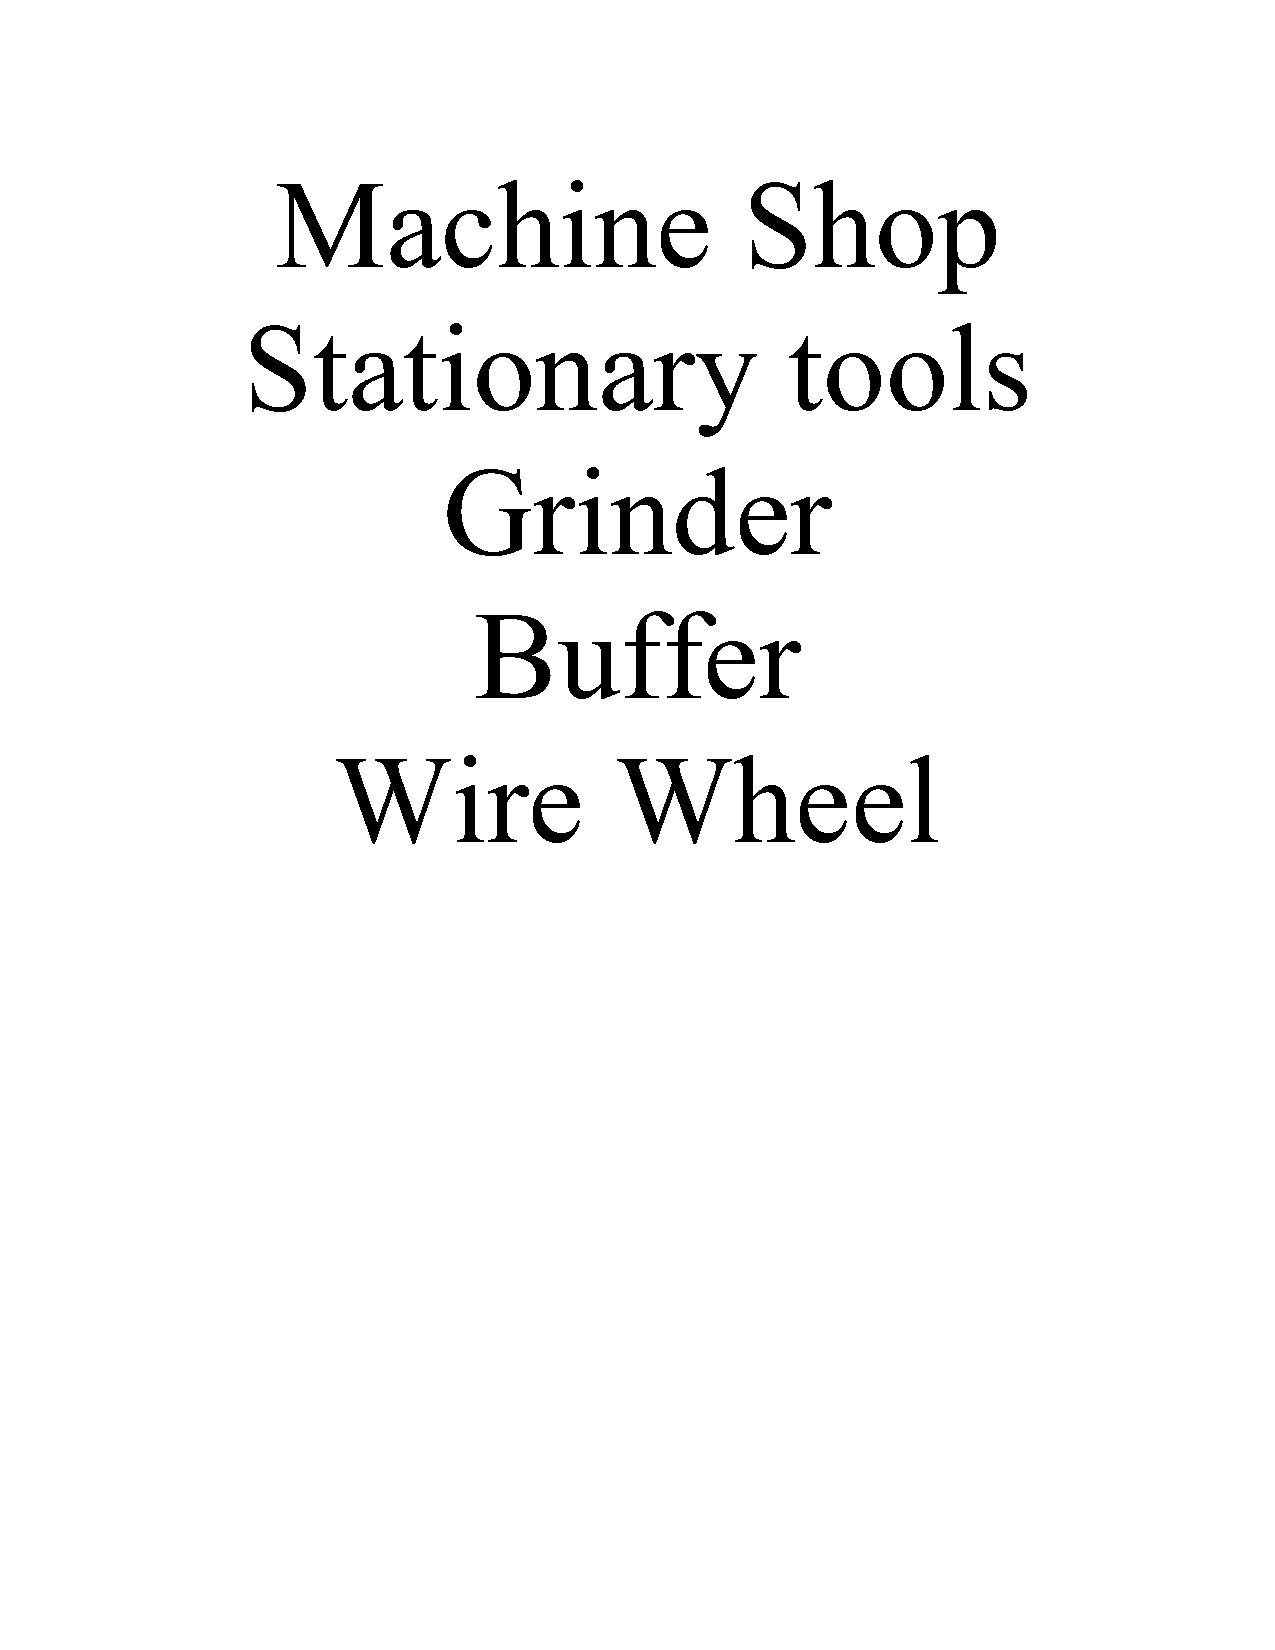 Machine Stationary Grinder.pdf